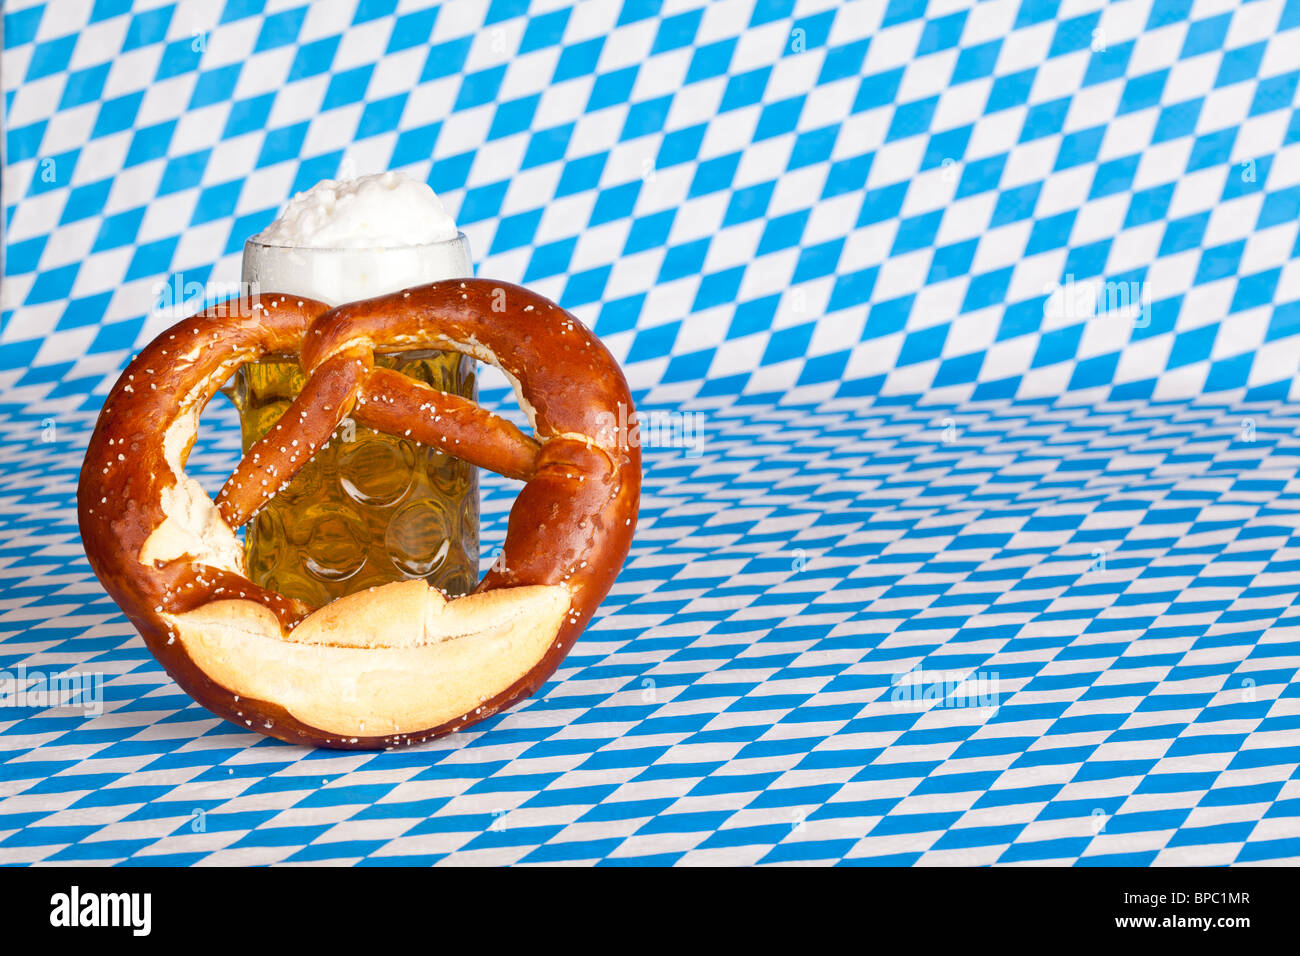 Oktoberfest beer stein with pretzel and Bavarian flag in background Stock Photo